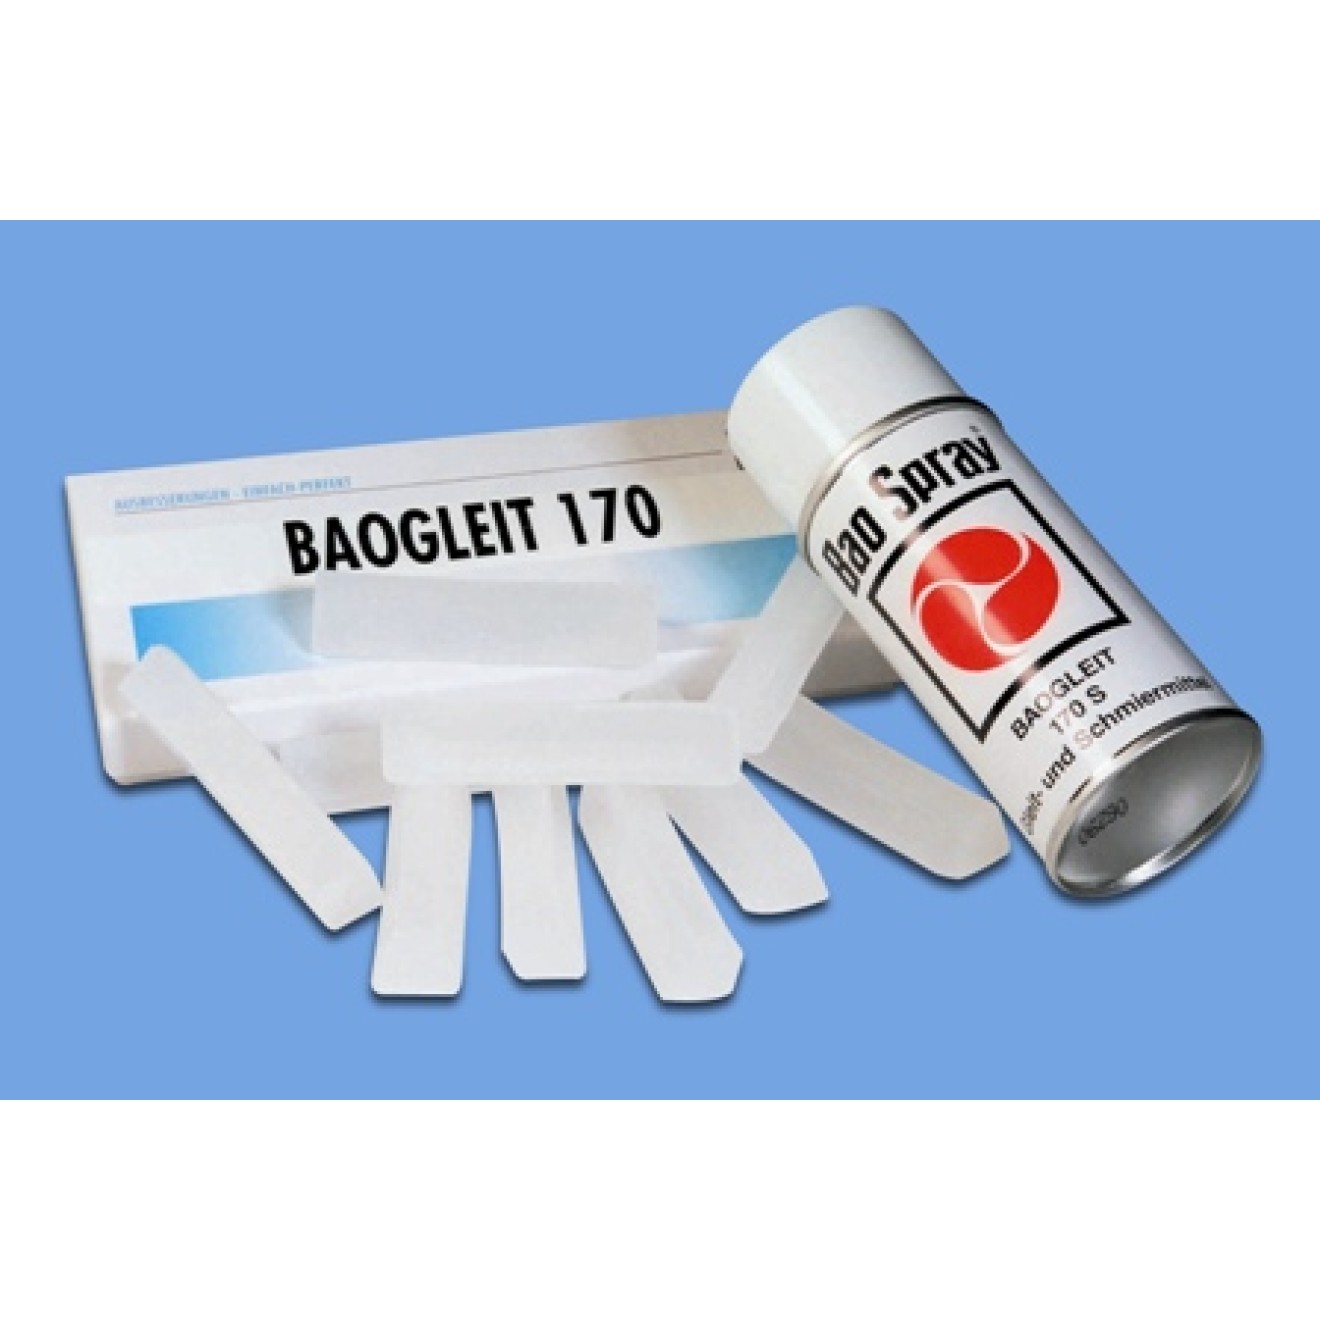 Baogleit 170